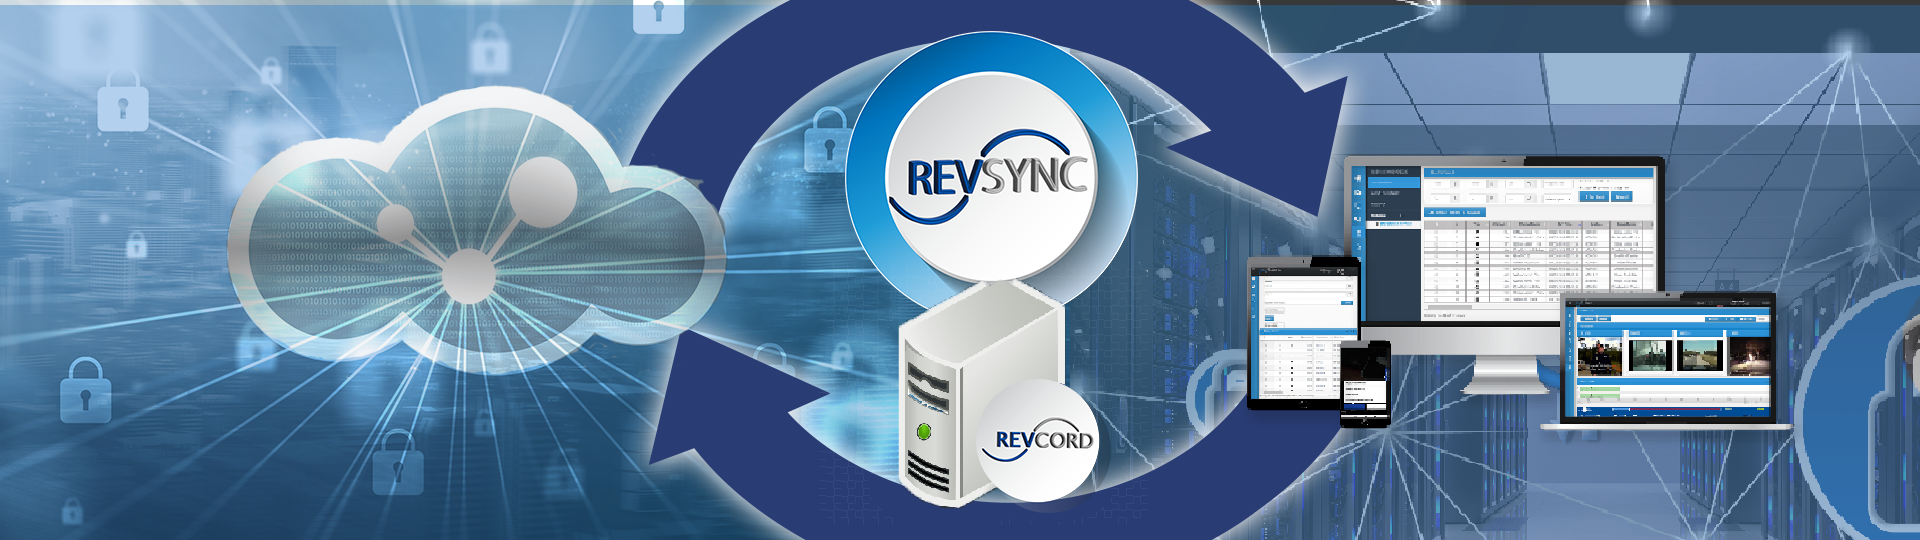 RevSync Web Image